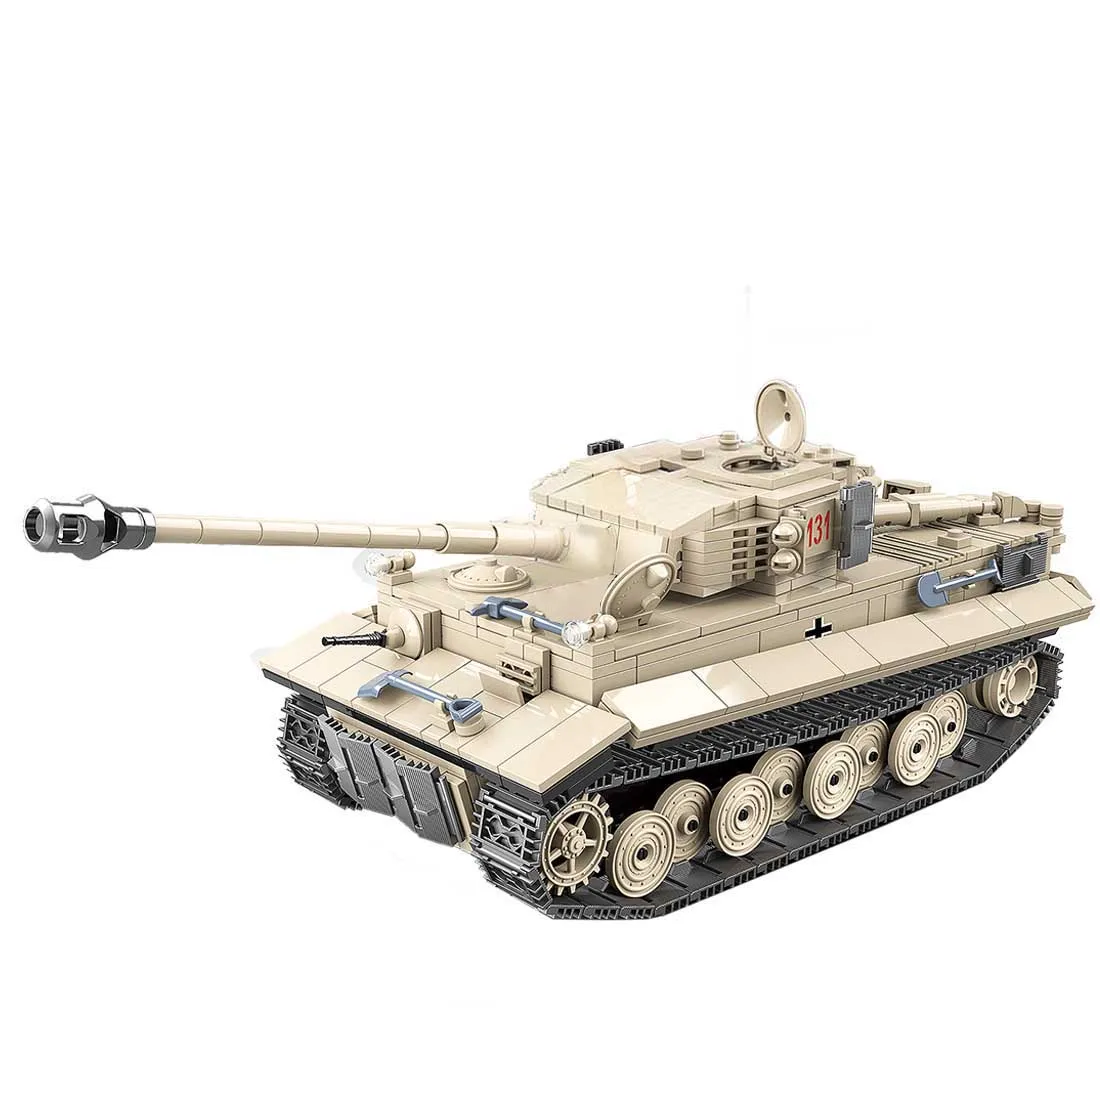 General Jims WW2 Military Army German Tiger Tank 131 Model Toy Building Brick Set 1018 Pieces